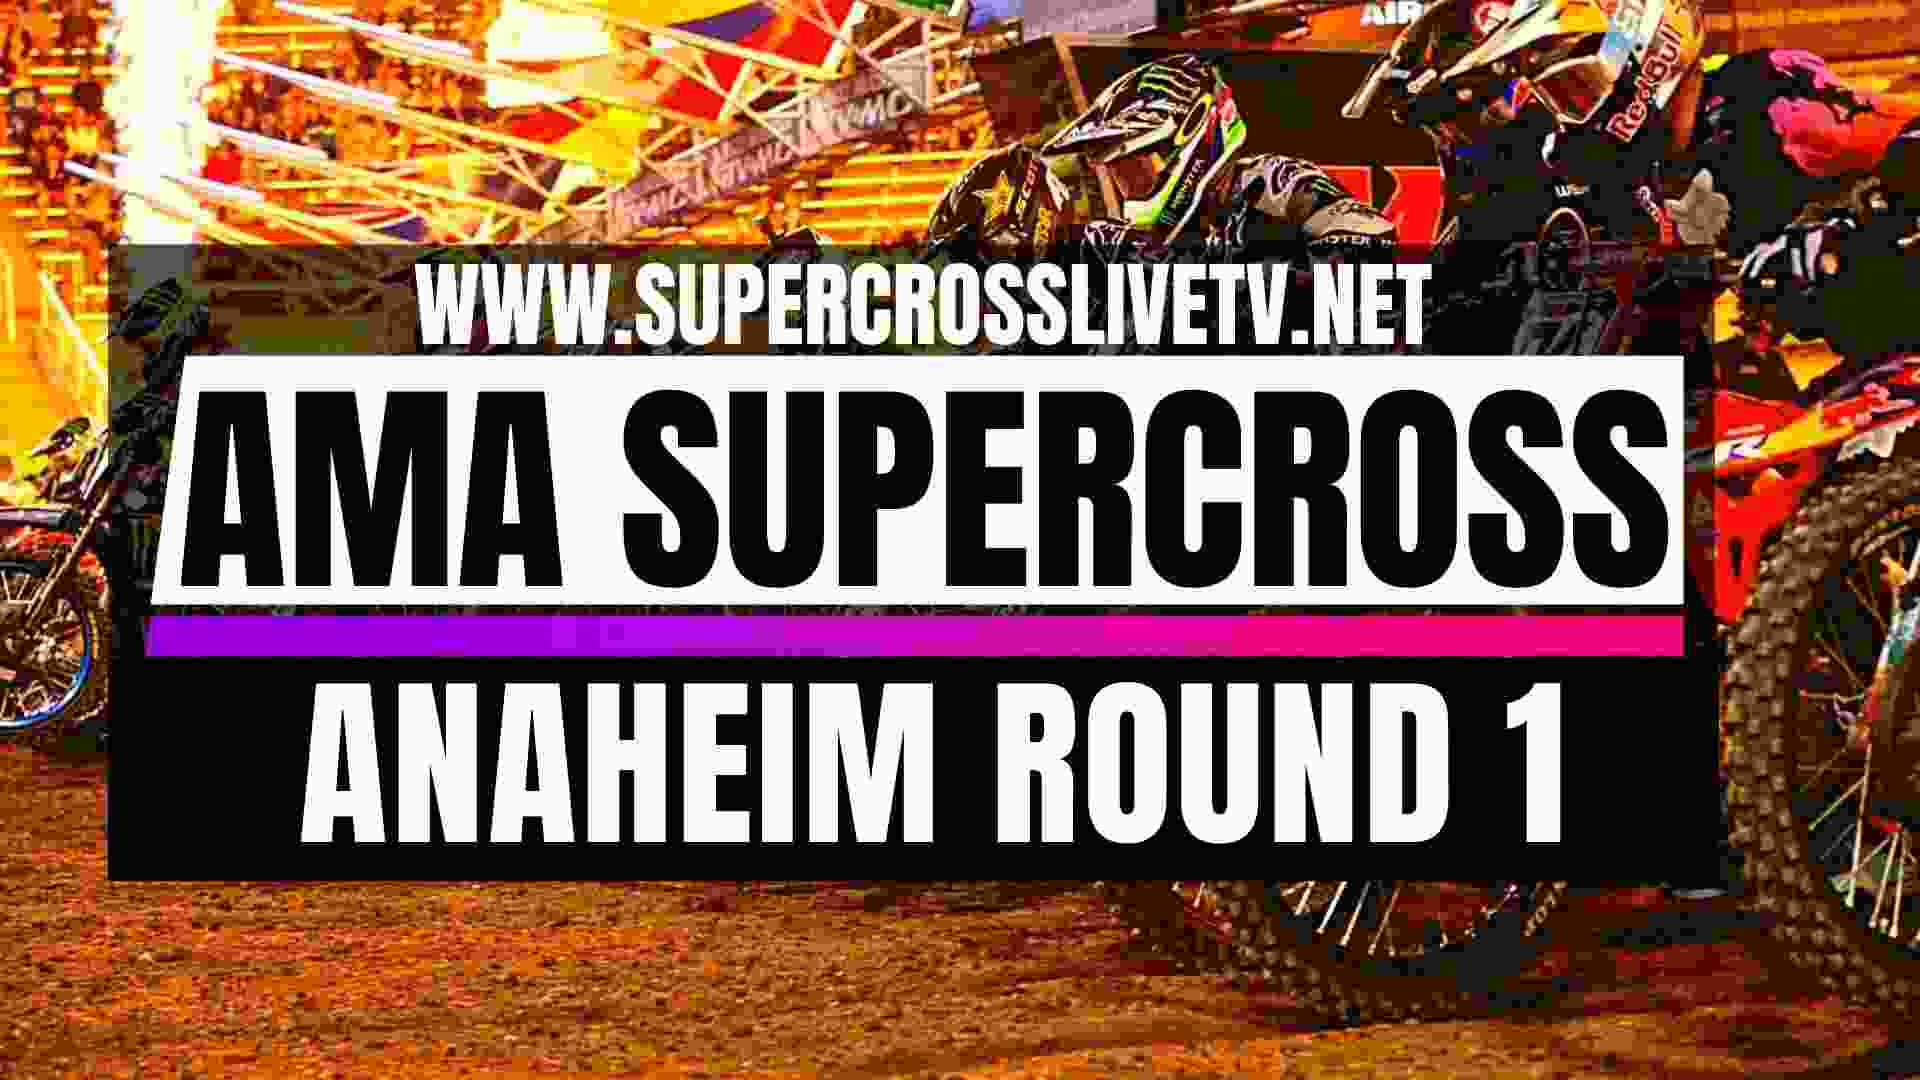 Anaheim 1 Live Stream AMA Supercross